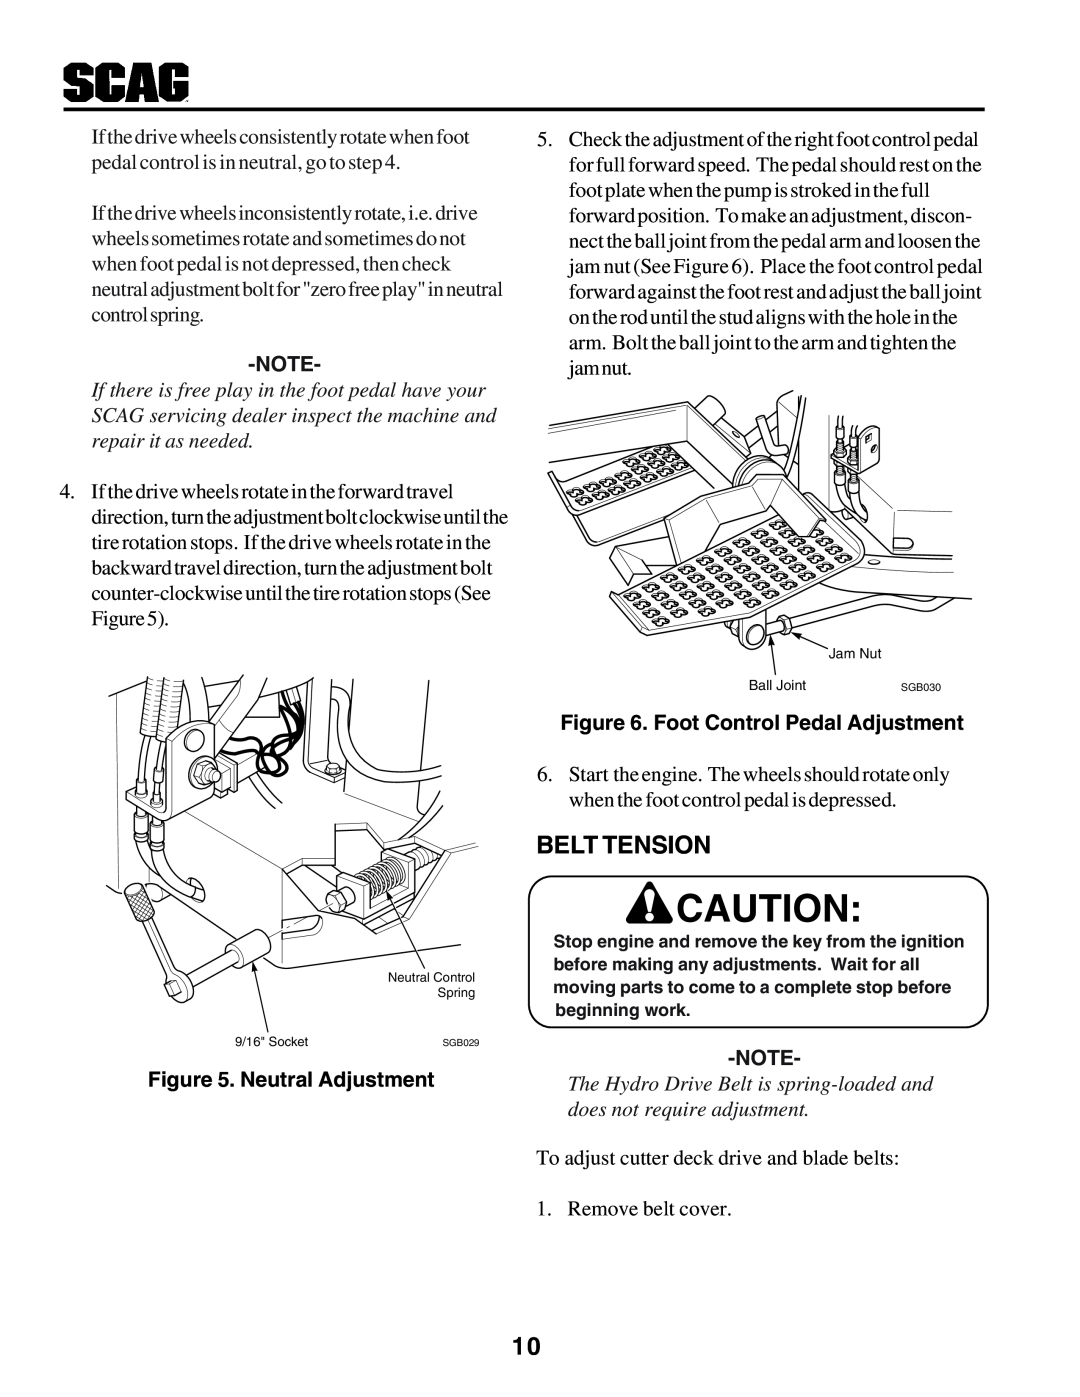 Scag Power Equipment STHM manual Belt Tension, Neutral Adjustment, Foot Control Pedal Adjustment 